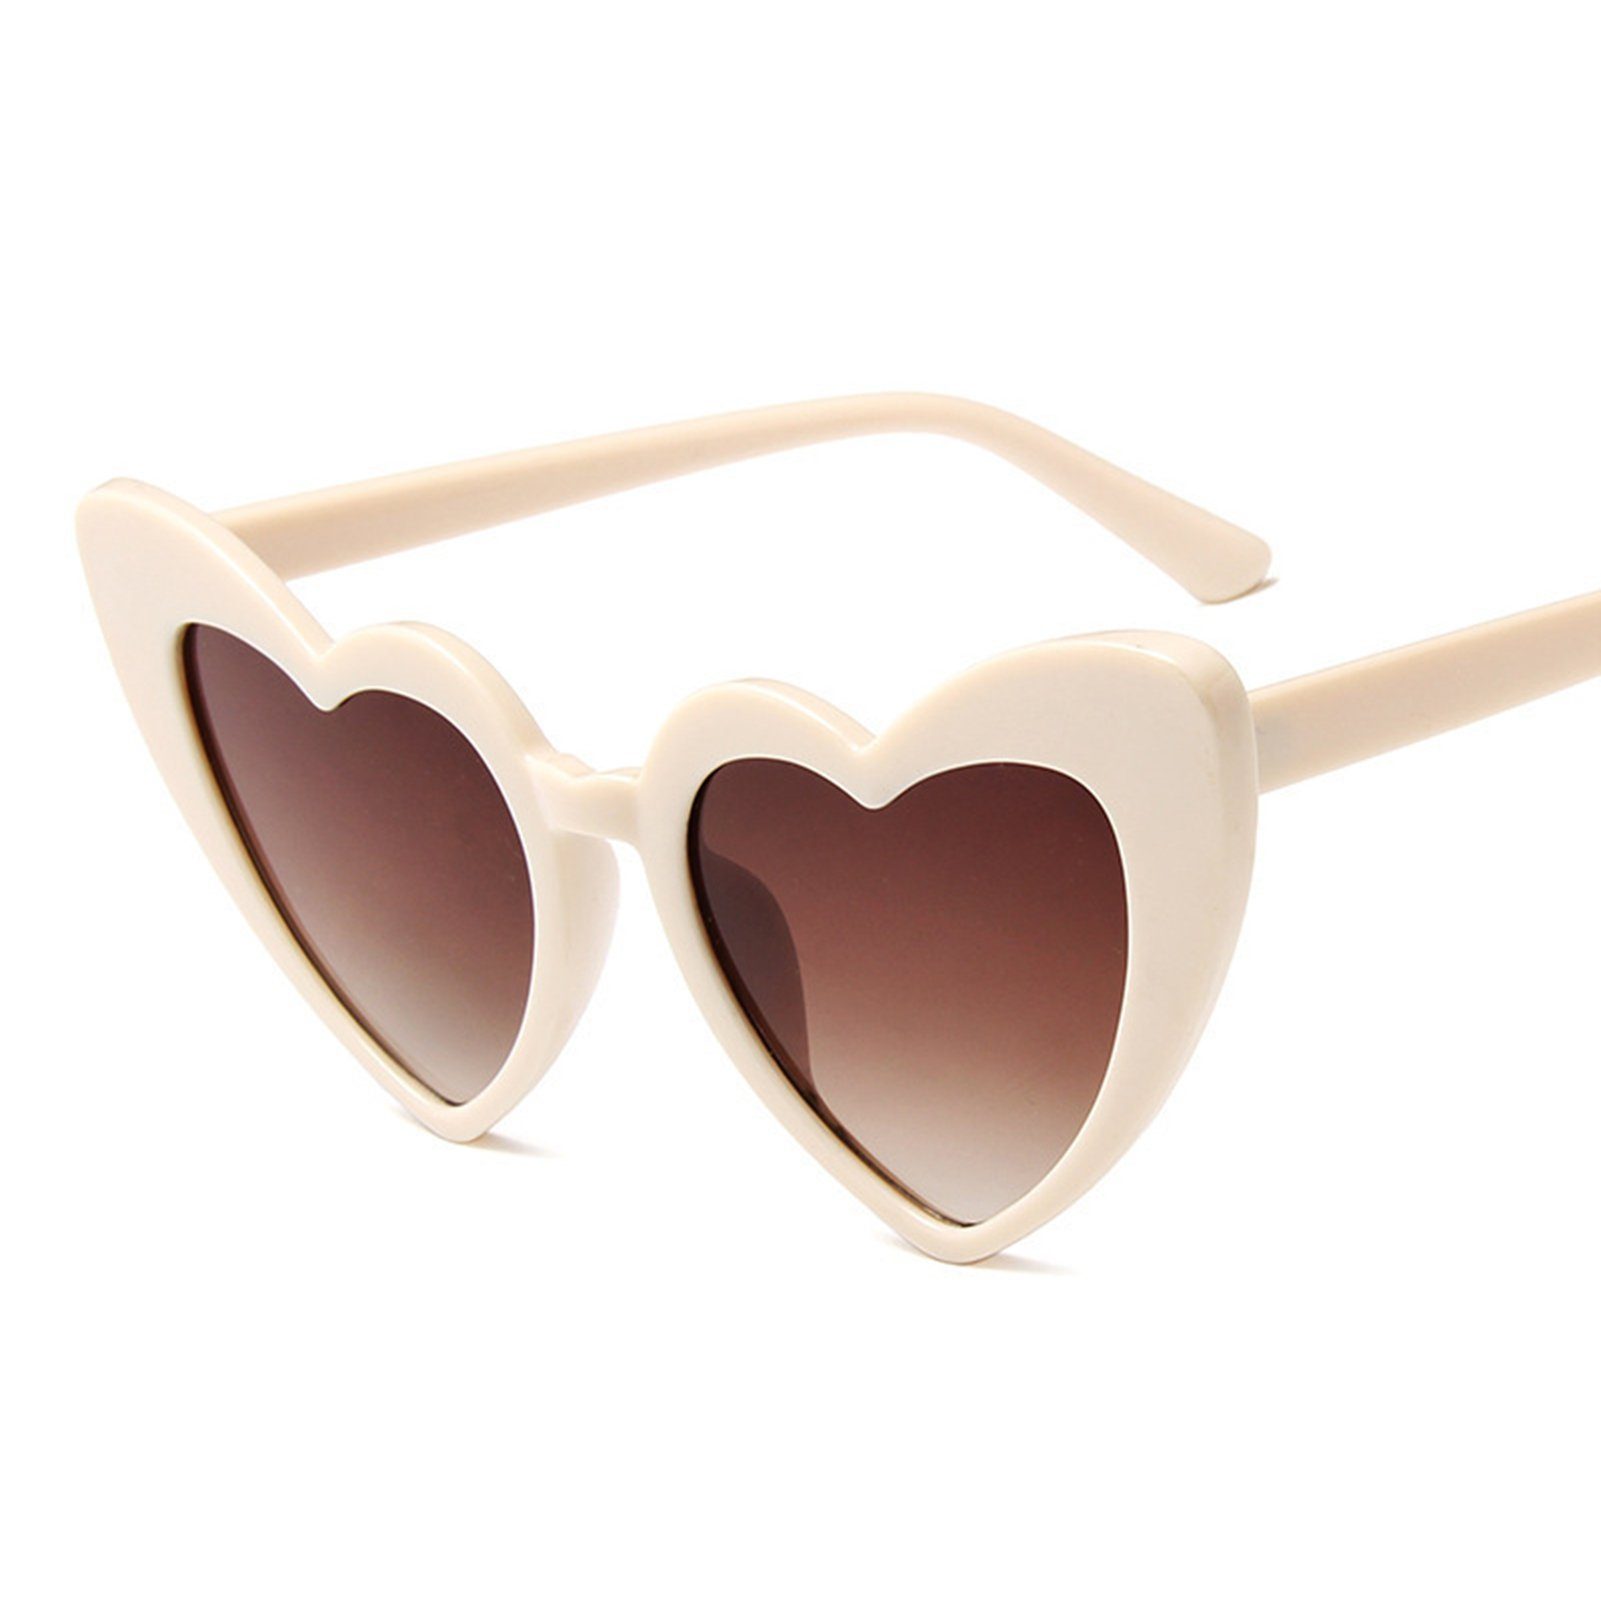 Blusmart Retrosonnenbrille Damen-Sonnenbrille In Herzform, Vintage-Stil, Blendfrei beige